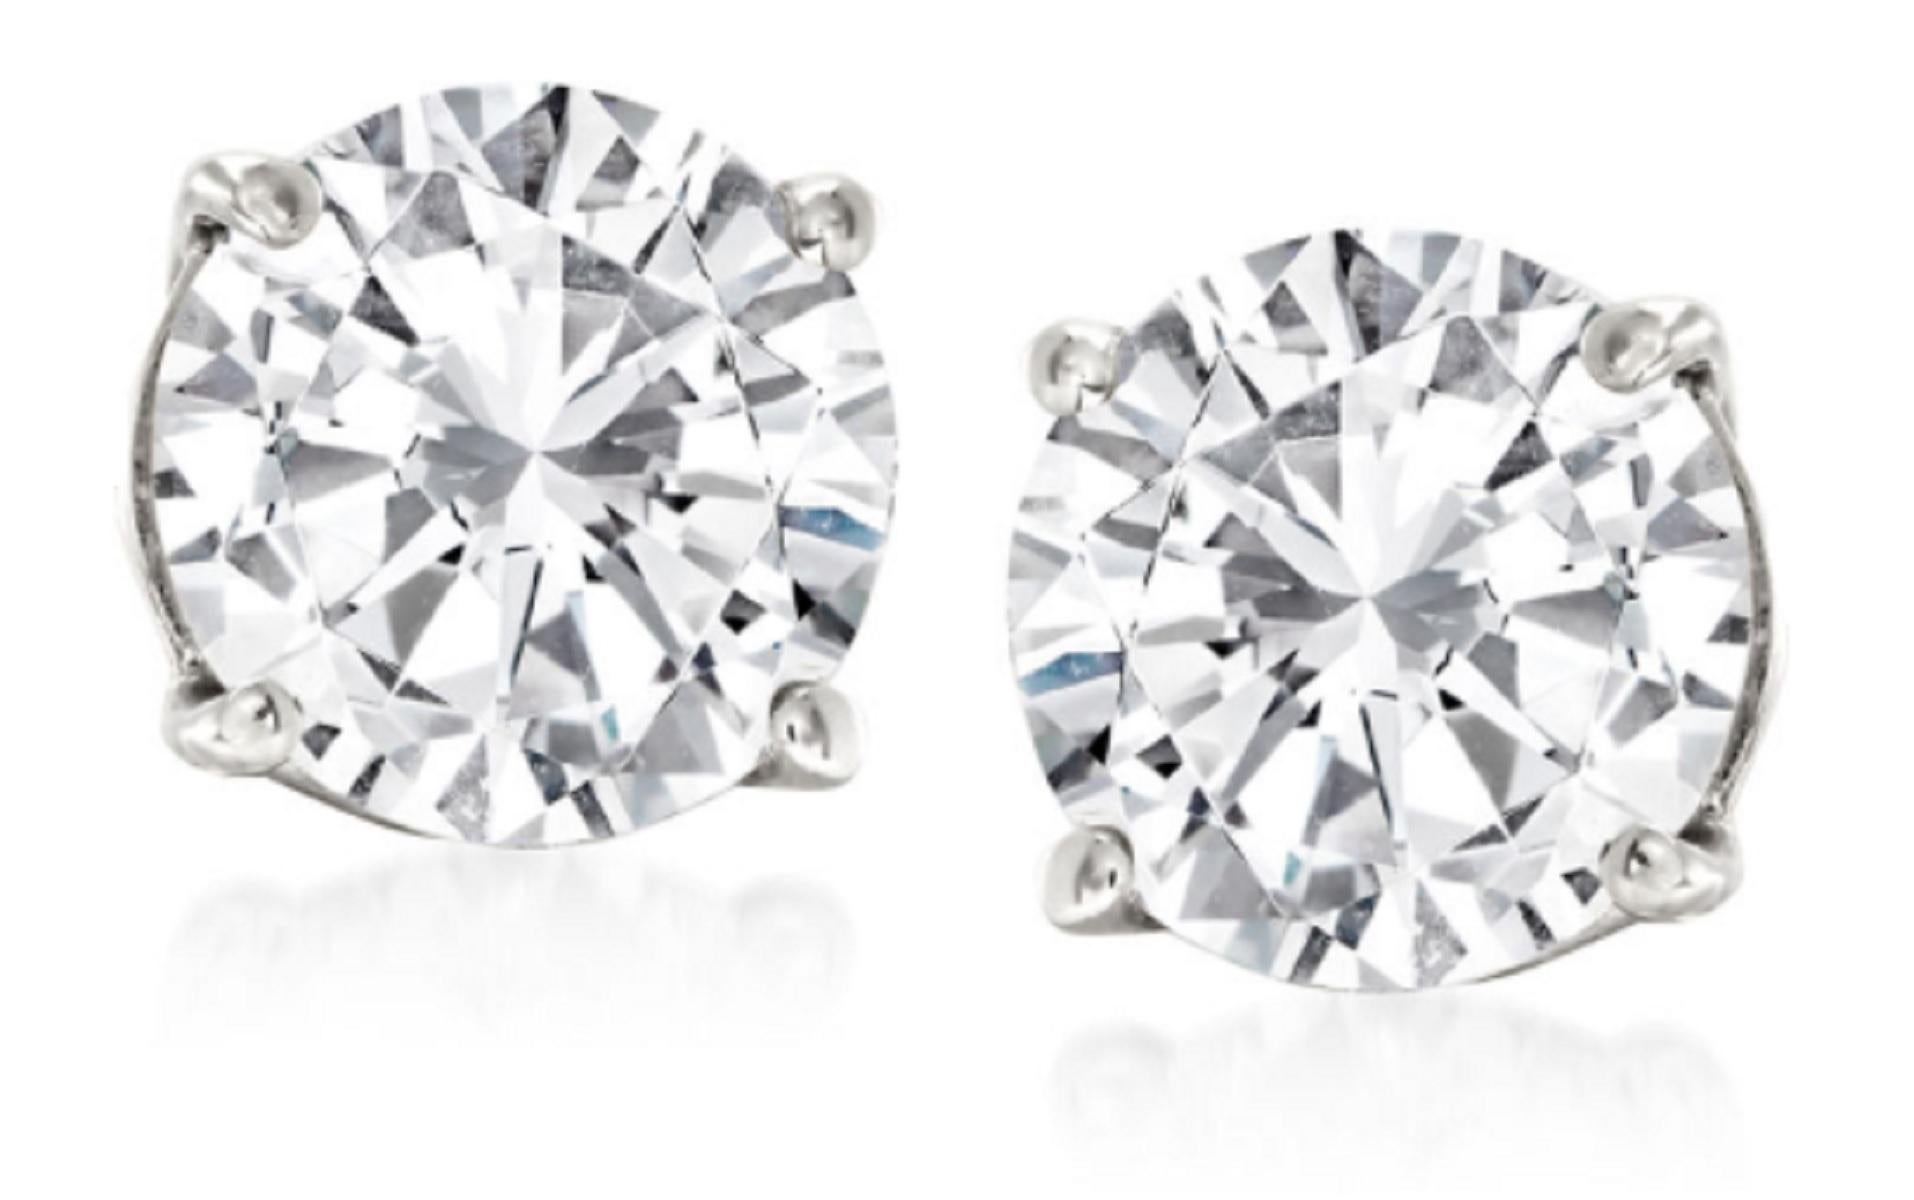 A perfect pair of 3.03 carat brilliant cut diamond studs
